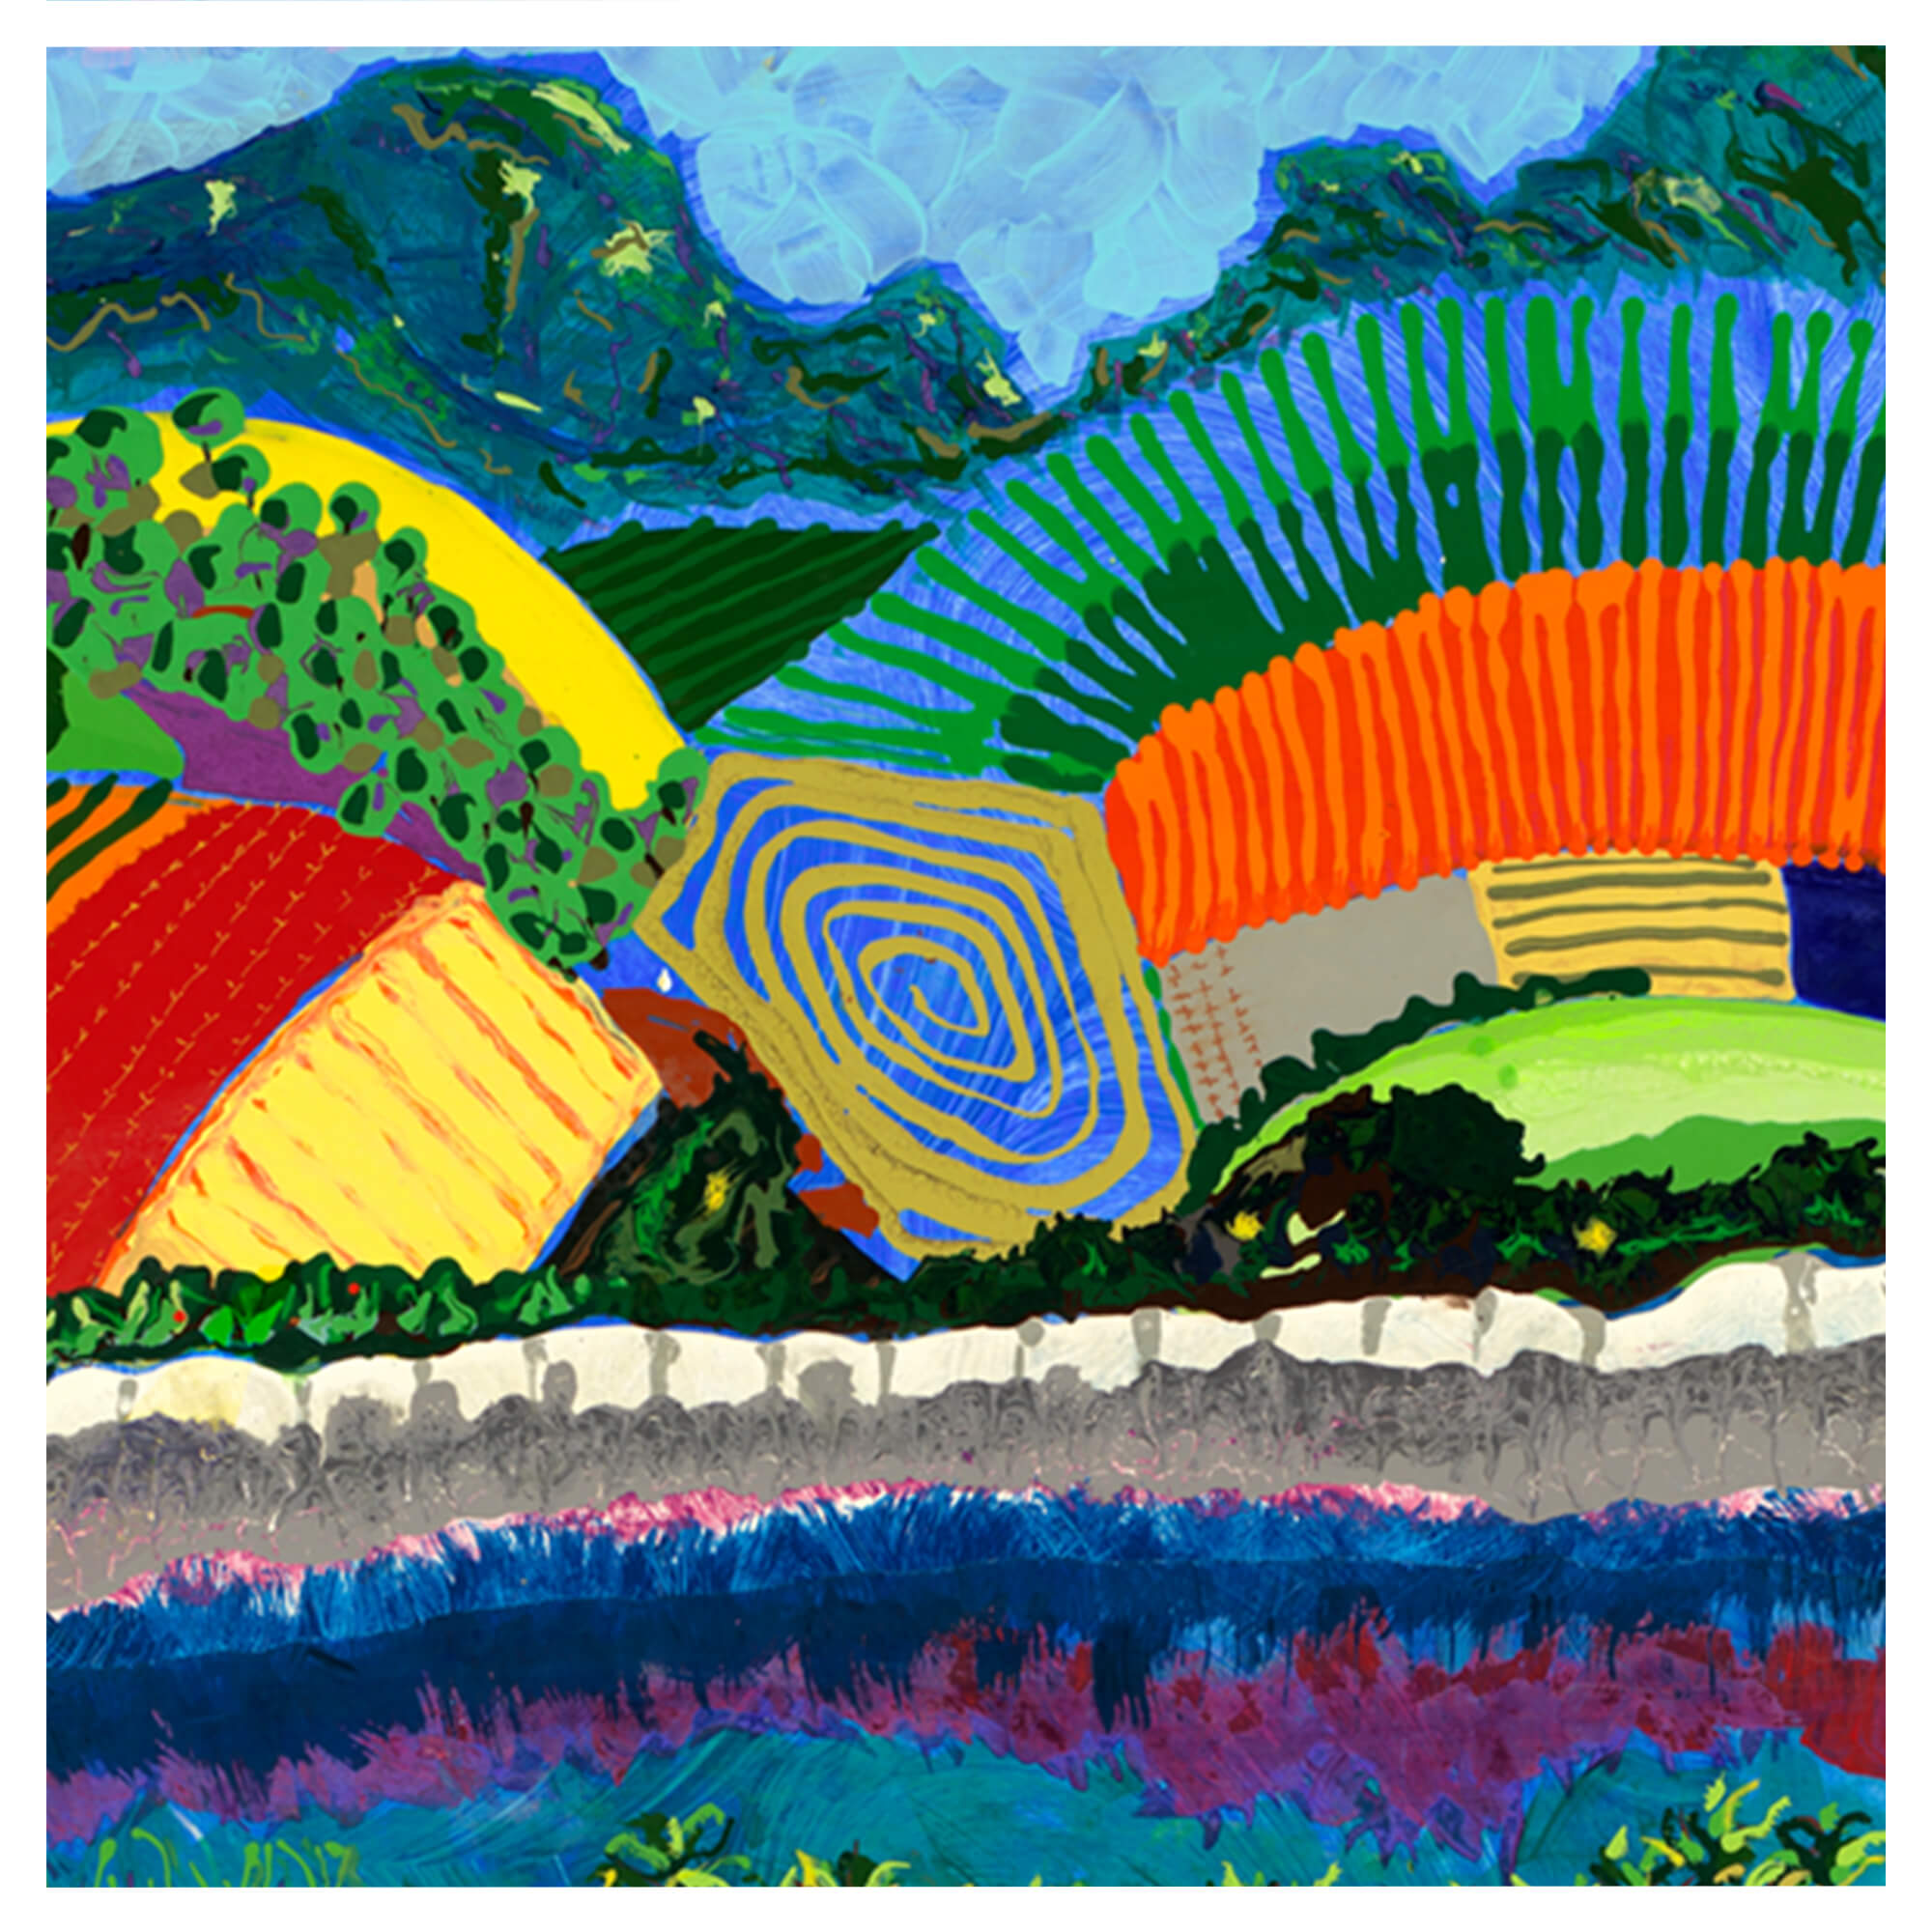 An illustration showcasing an art with vibrant colors by hawaii artist robert hazzard